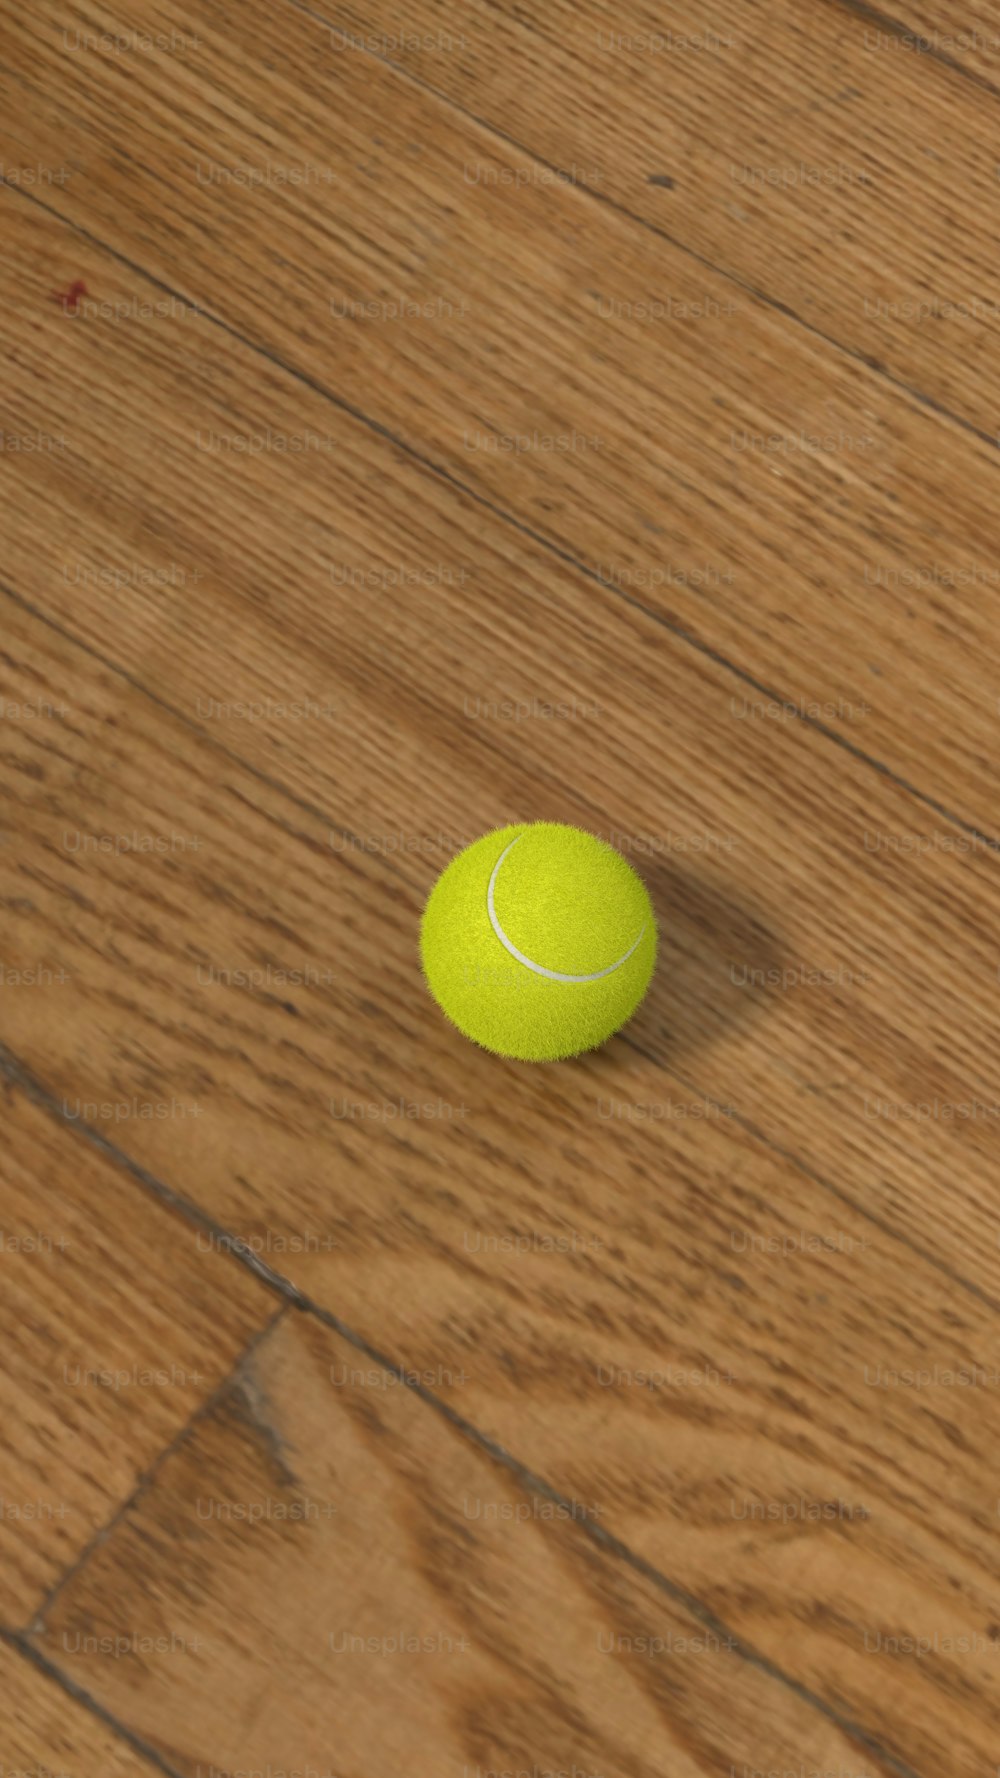 Una pelota de tenis sentada en un piso de madera